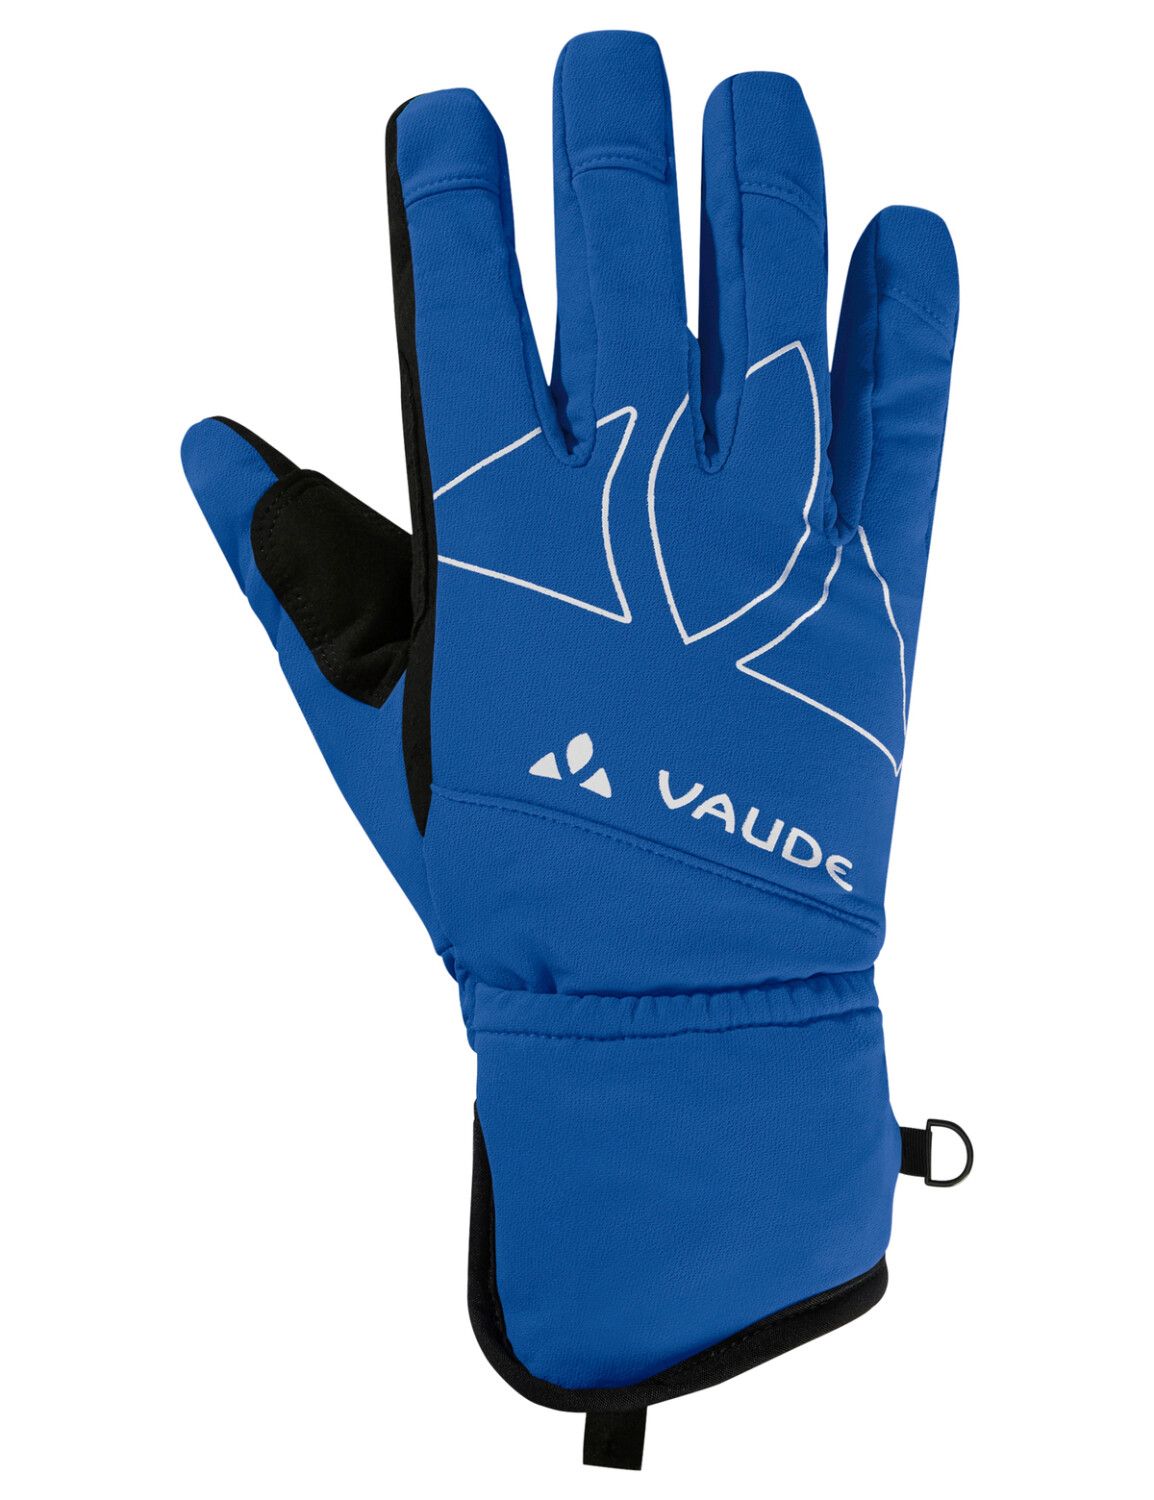 VAUDE La Varella Gloves (Bild 1)